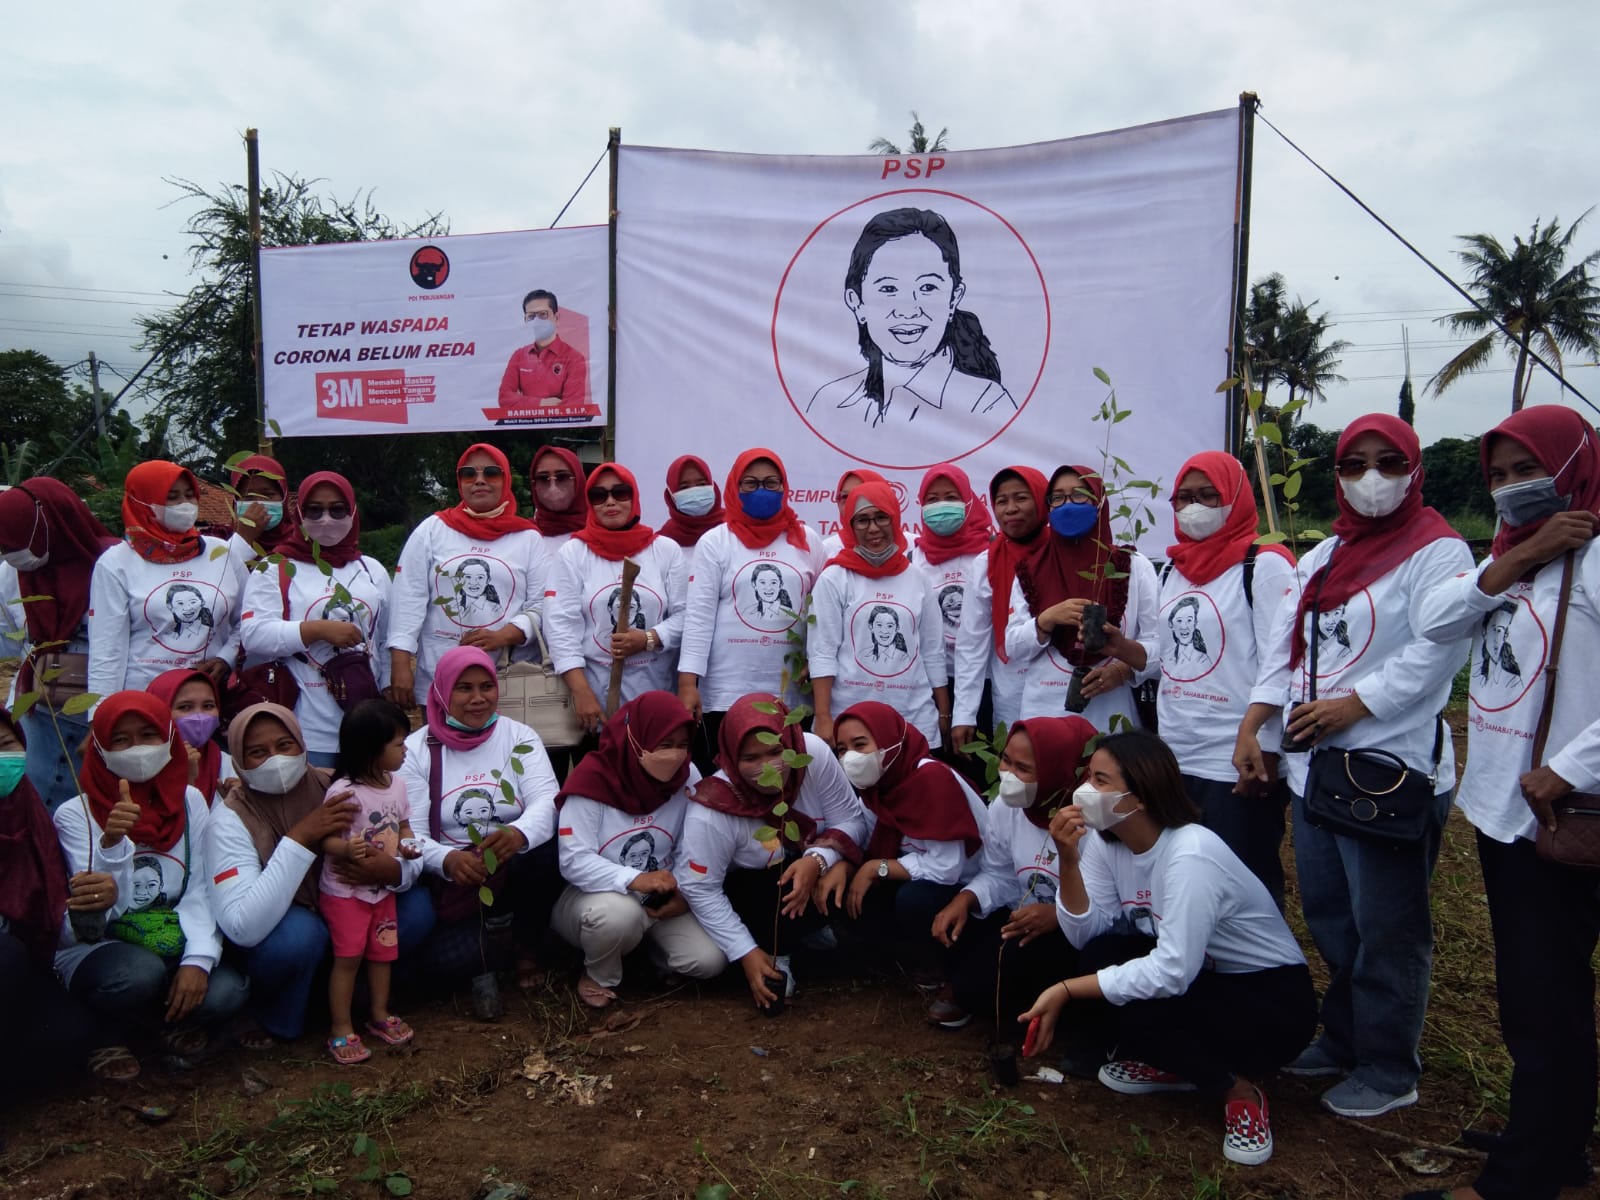 Perempuan Sahabat Puan Menanam Untuk Hijaunya Indonesia